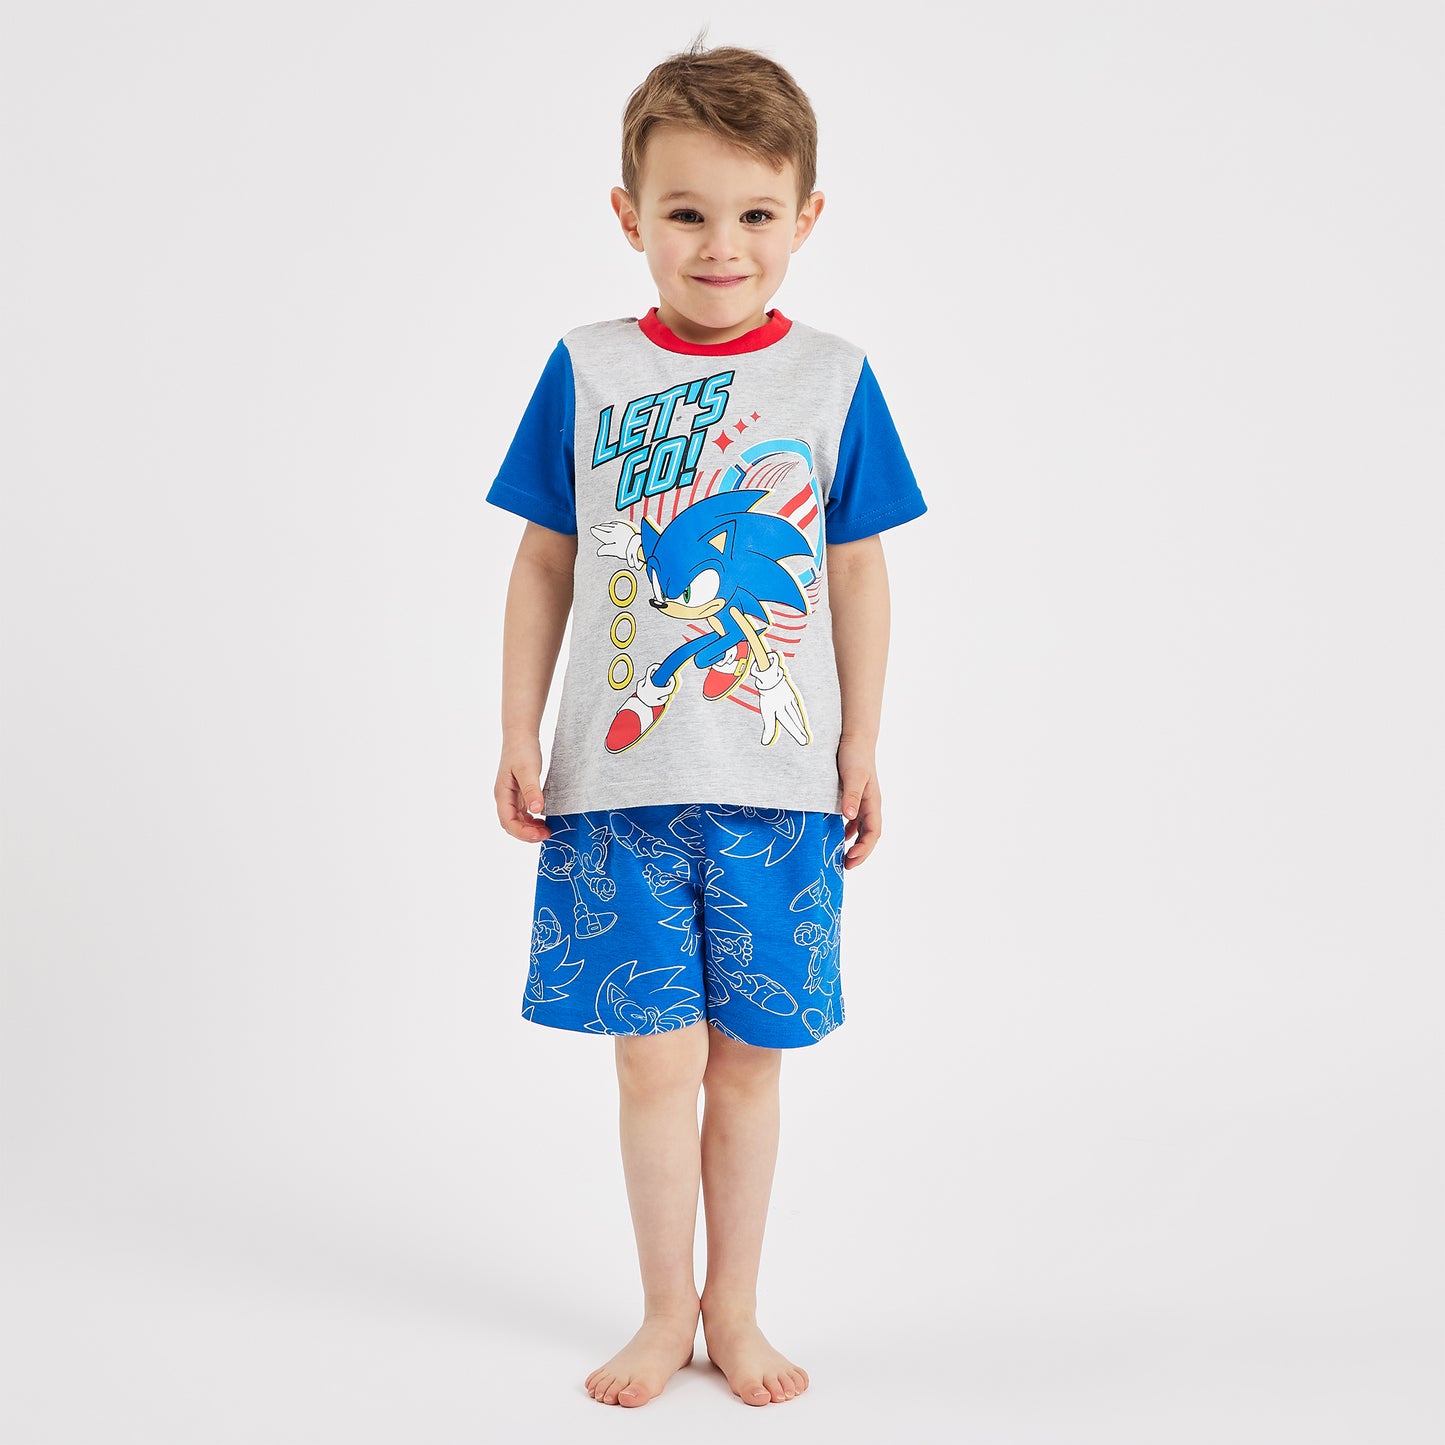 Boys Sonic Short Pyjamas - Lets Go